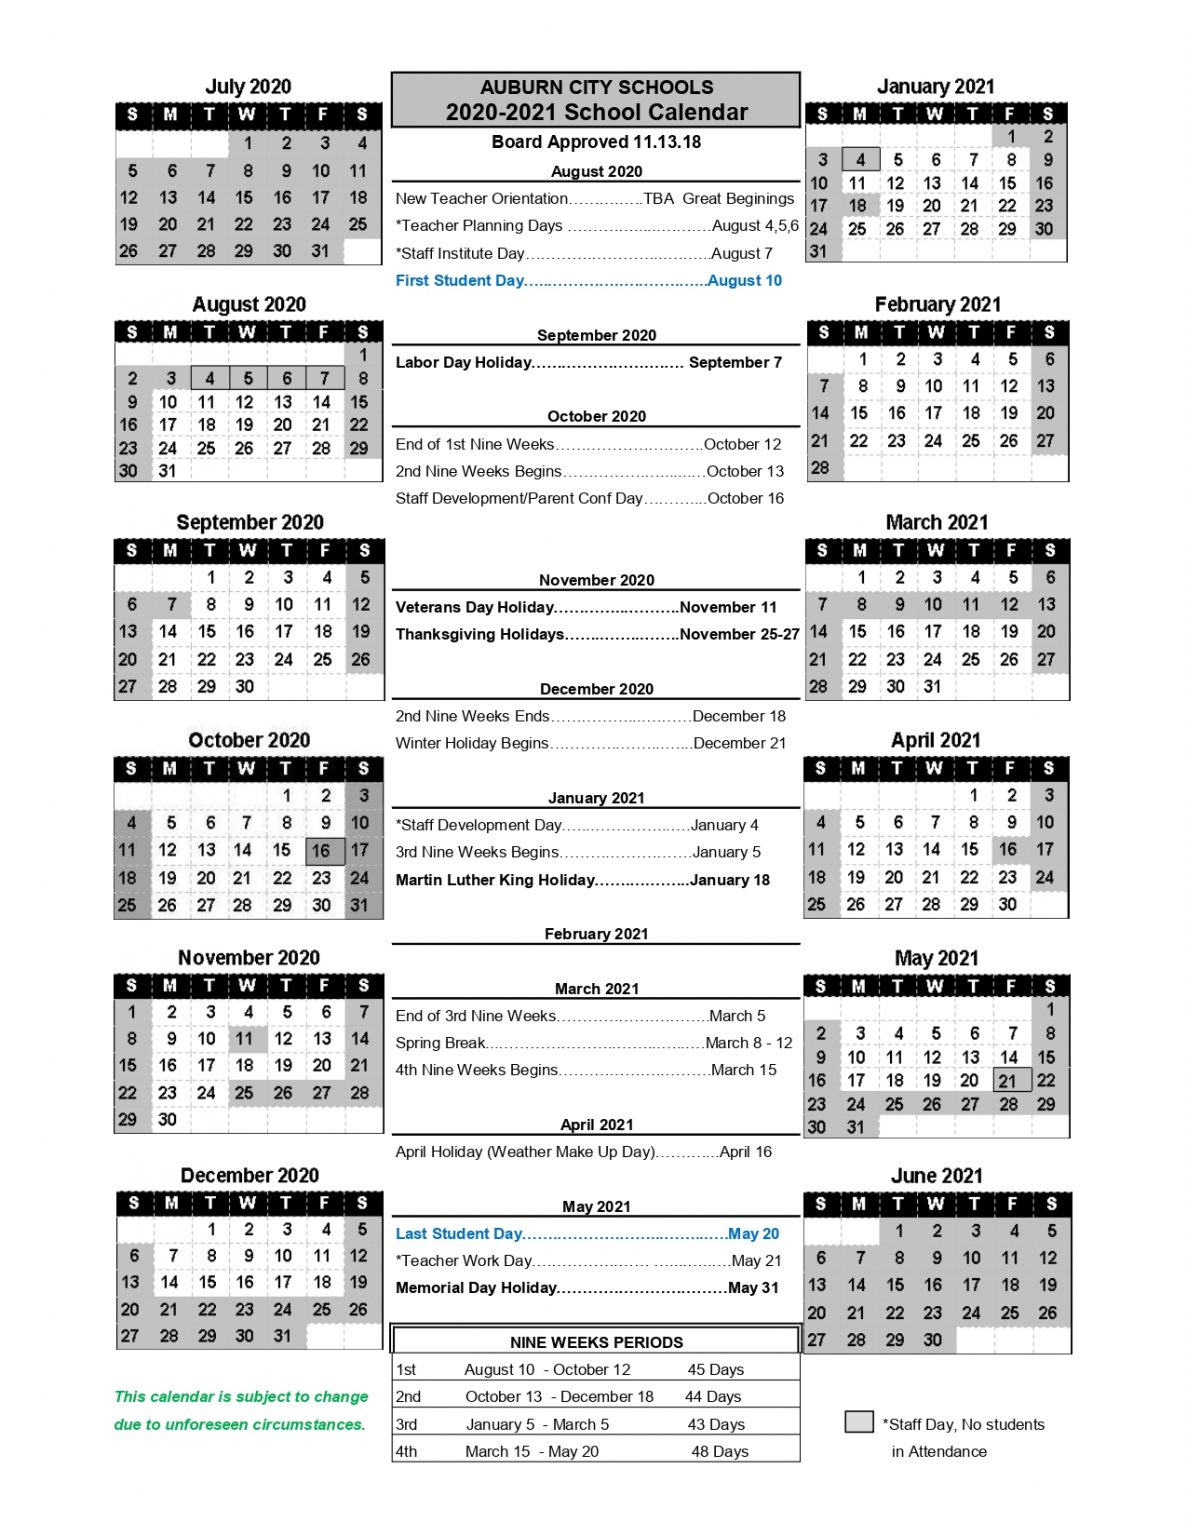 Auburn City Schools Calendar 2021 and 2022